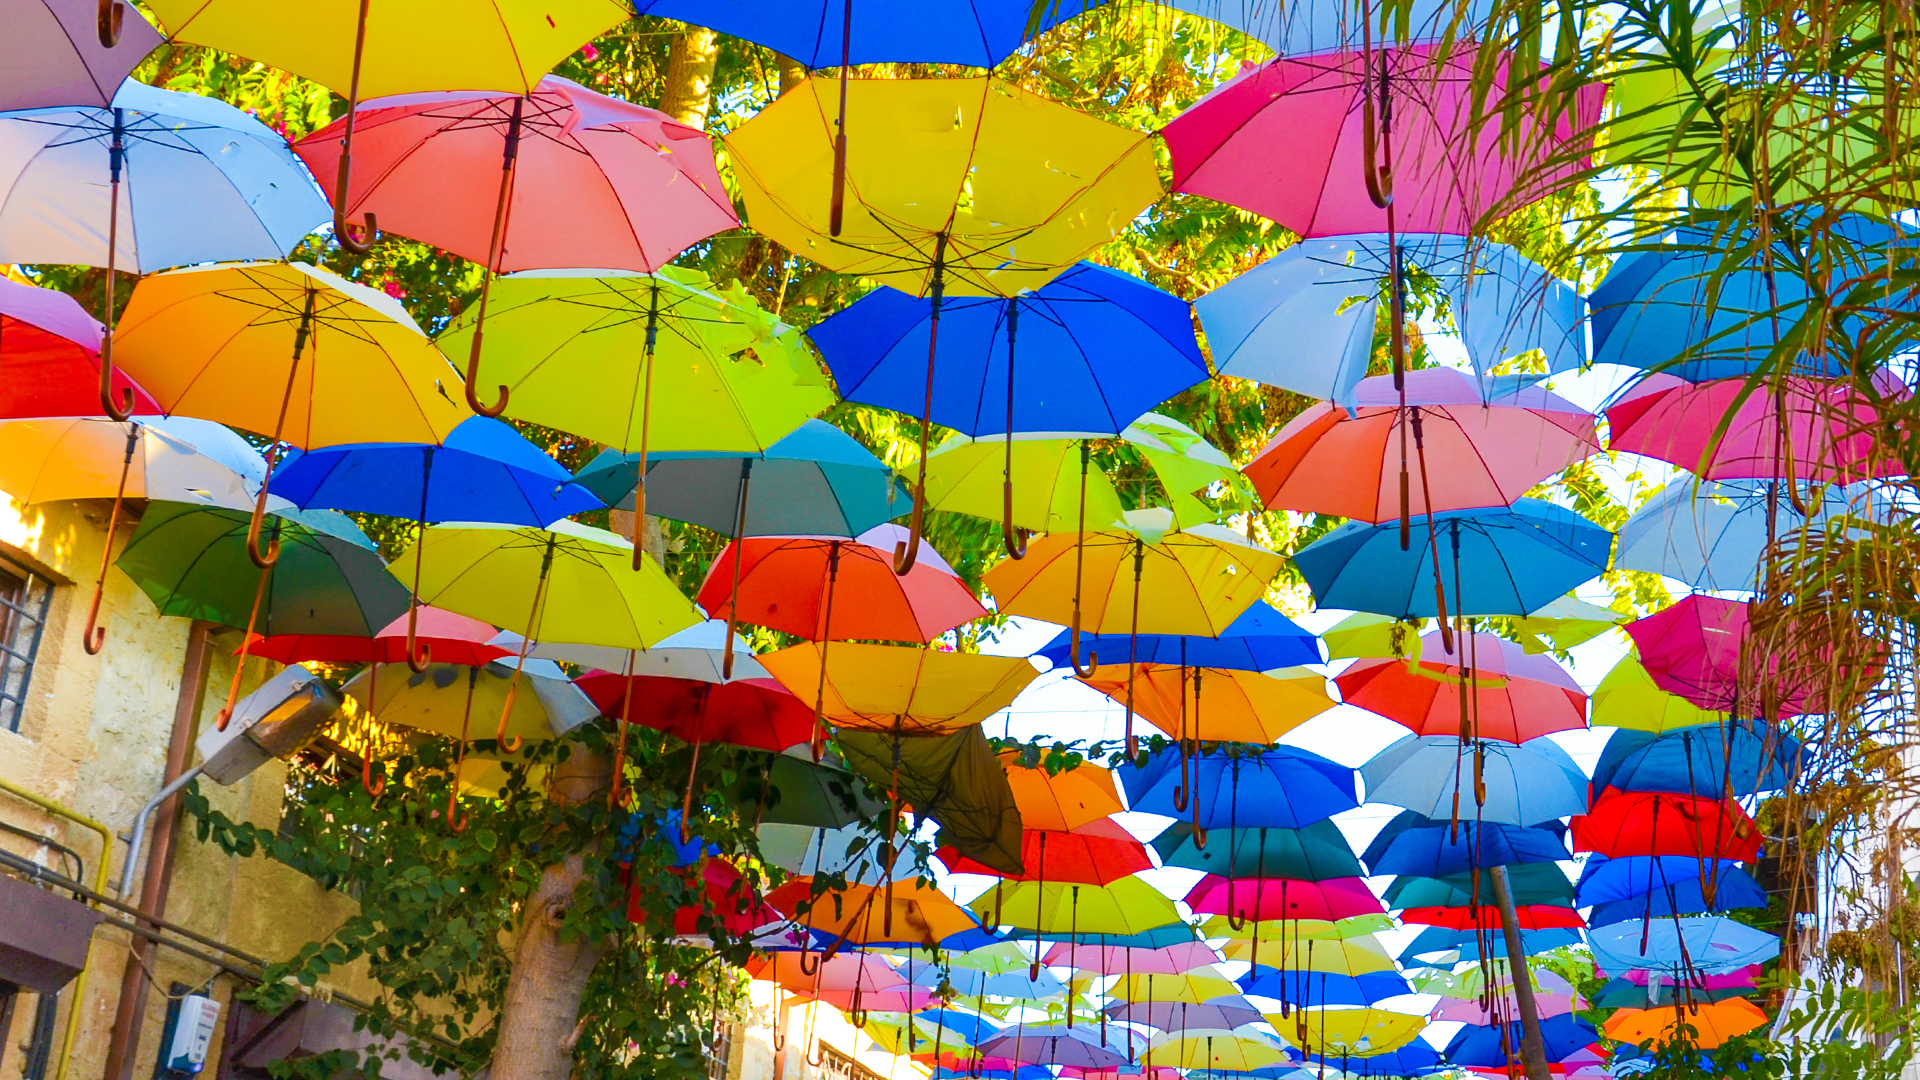 Cyprus street with hanging umbrellas